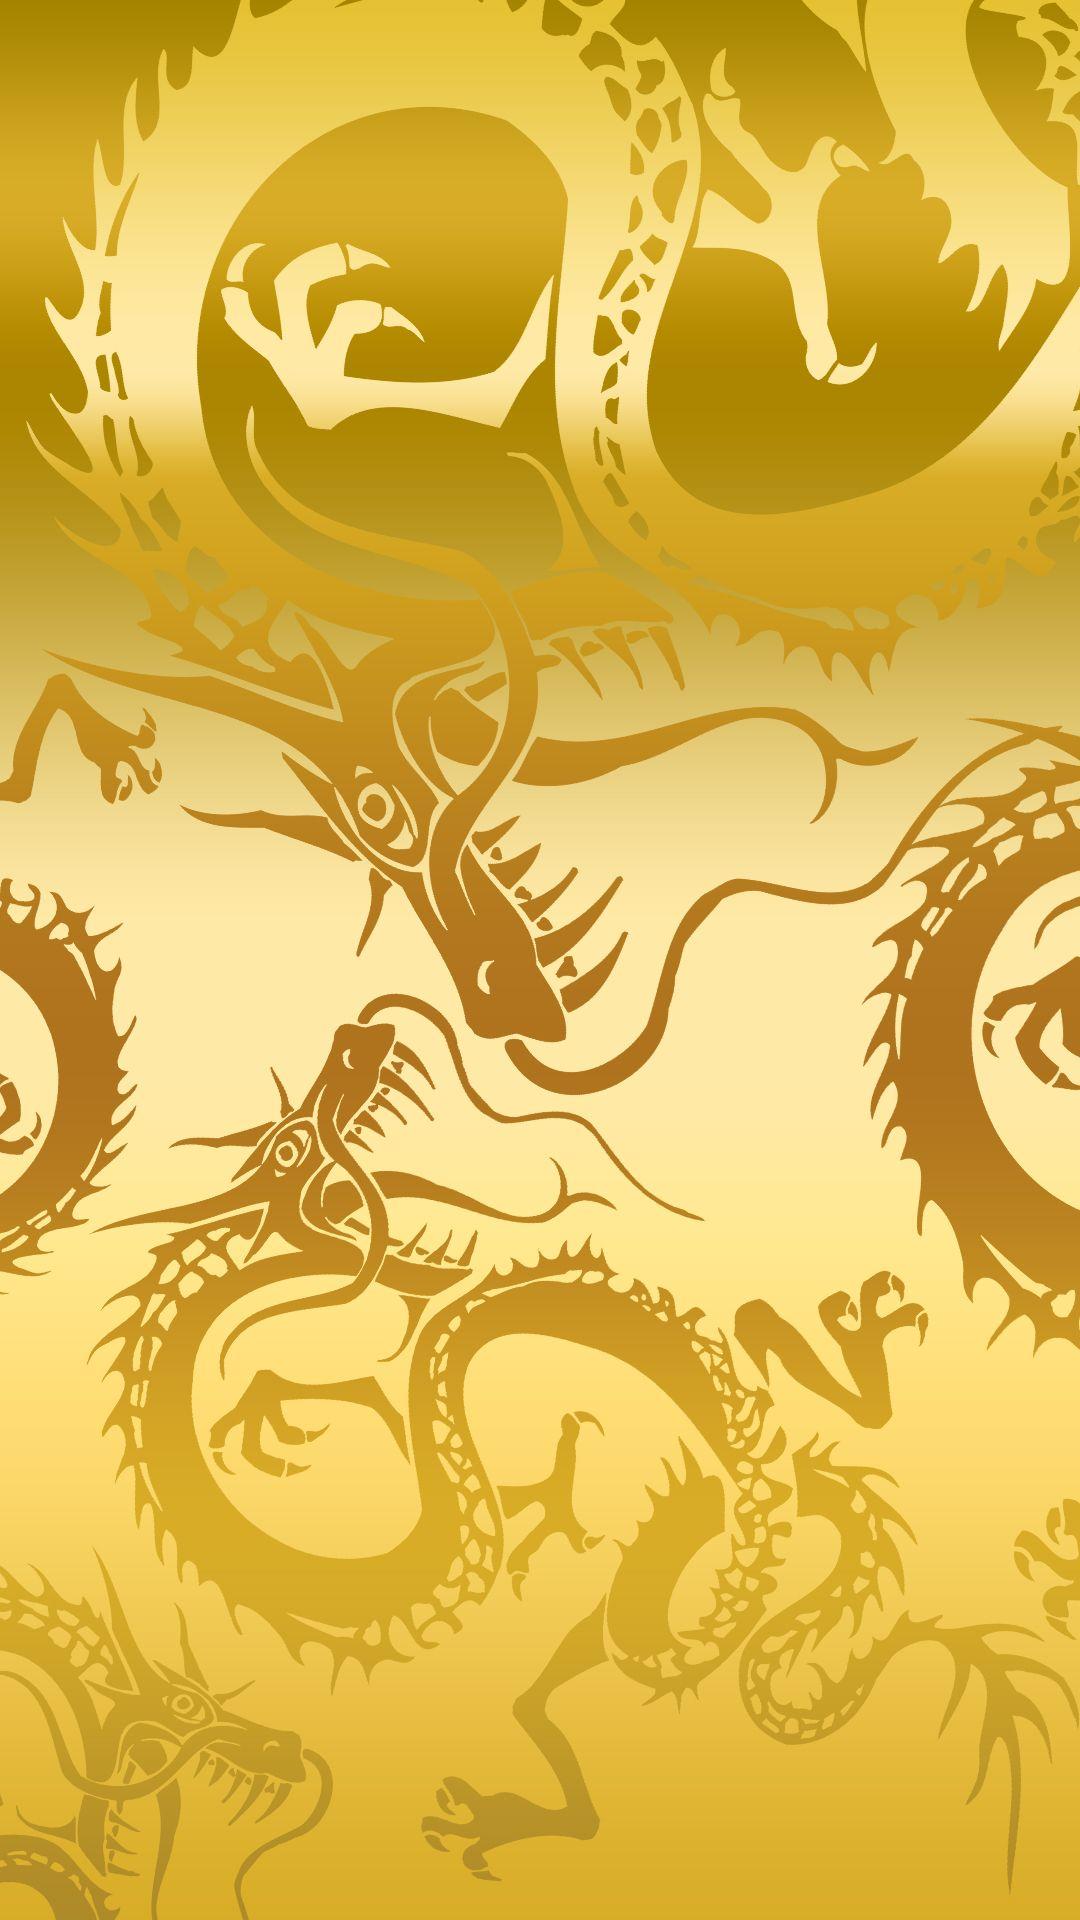 Cool Gold Dragon Logo - Golden Dragon Cool Samsung Galaxy S7 Wallpaper